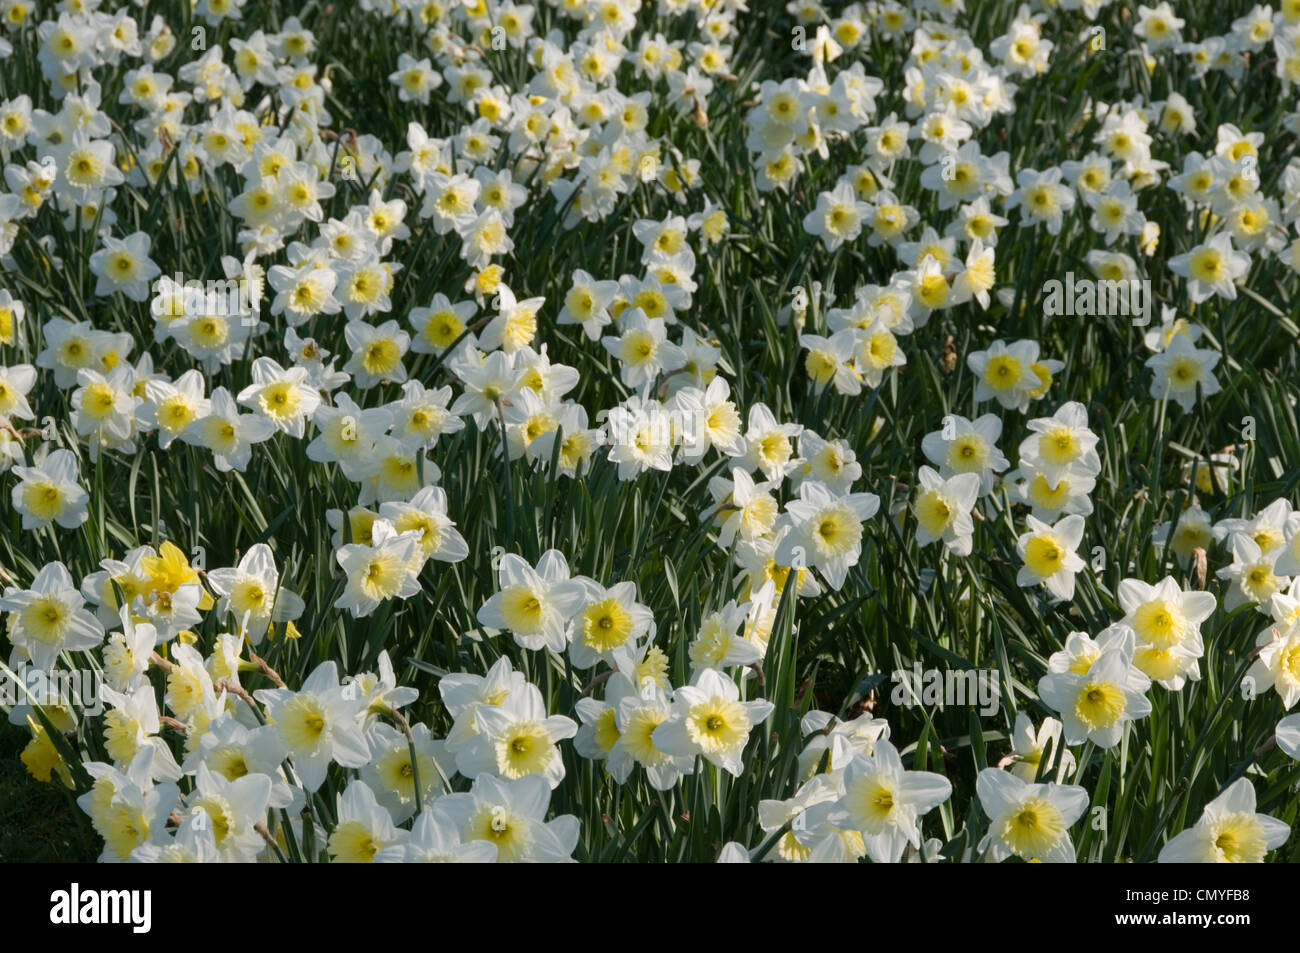 Massierten Narzissen in voller Blüte - weiß mit gelben Zentren Stockfoto